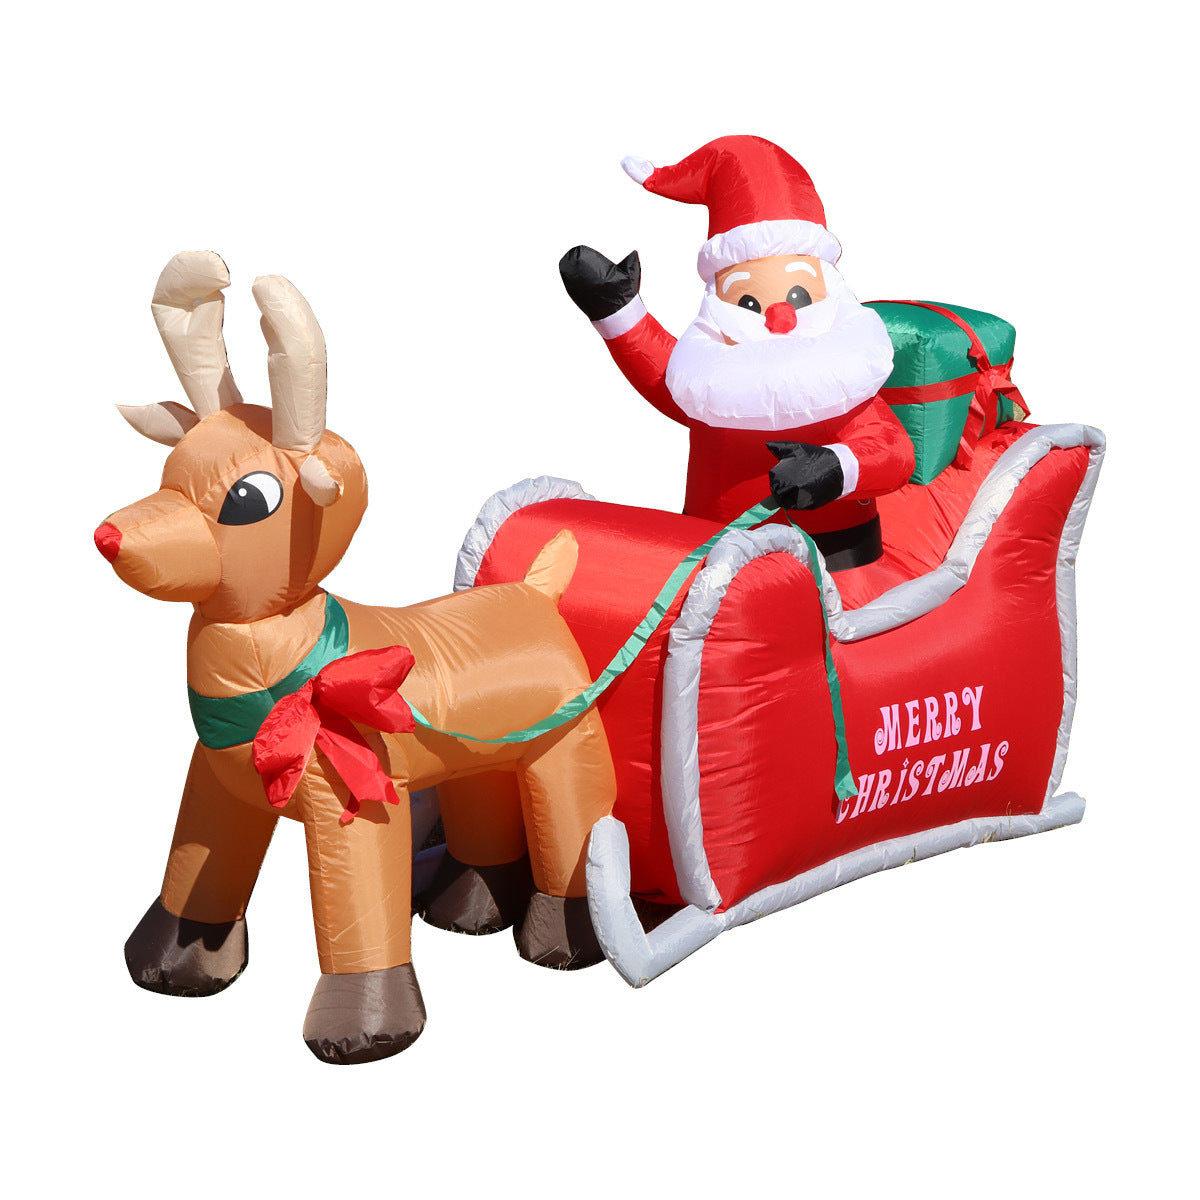 Christmas By Sas 1.2m Self Inflatable LED Santa Sleigh & Rudolph Deals499